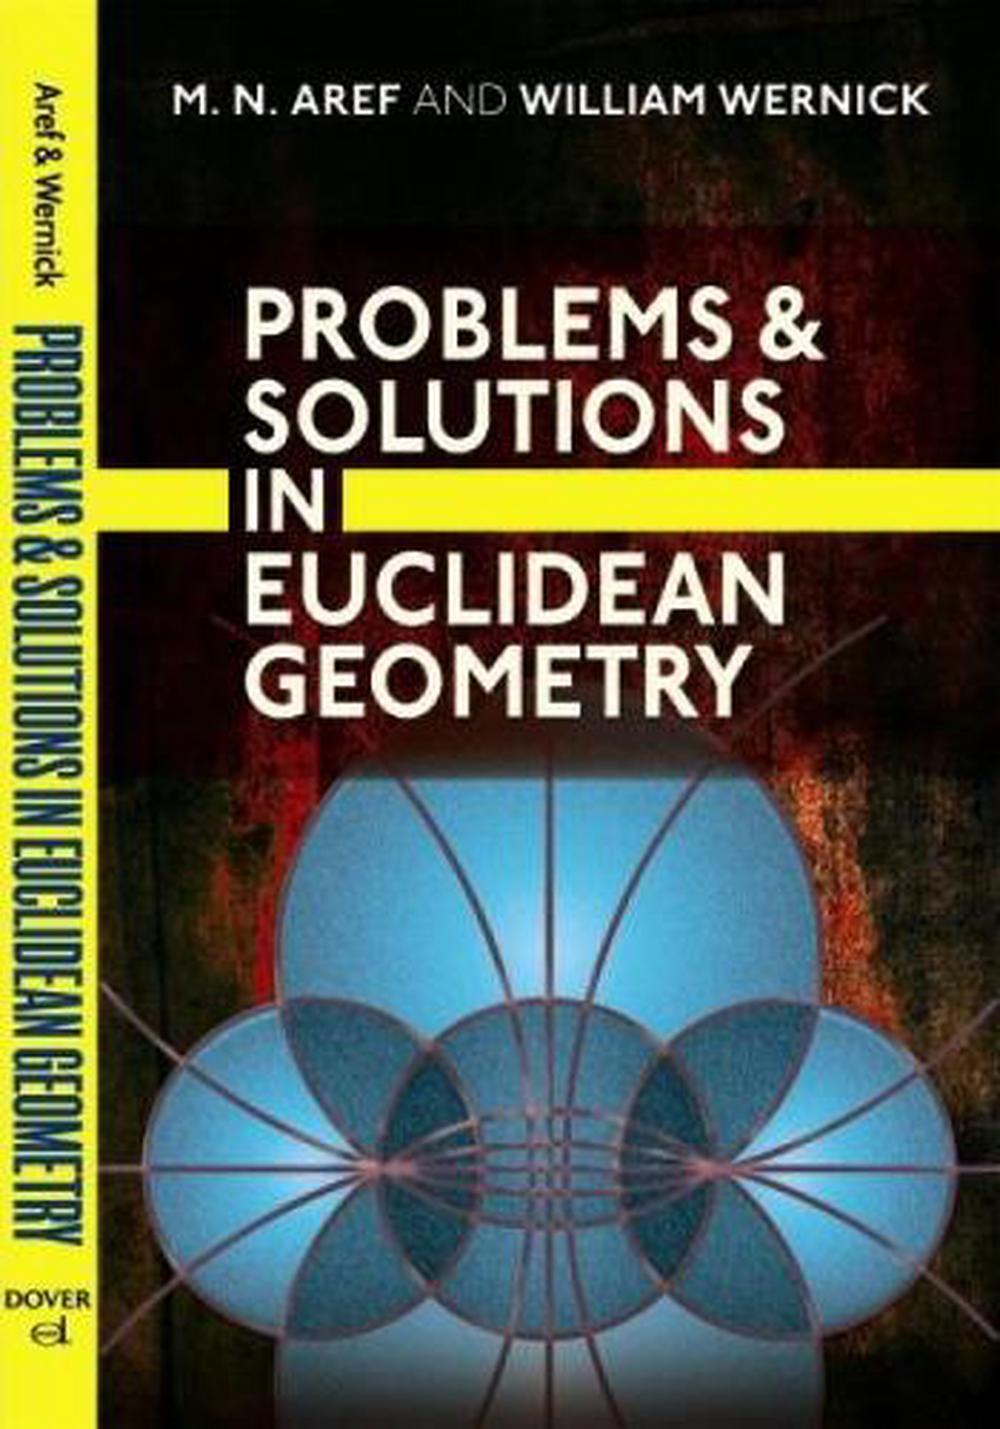 euclidean geometry theorems grade 11 pdf